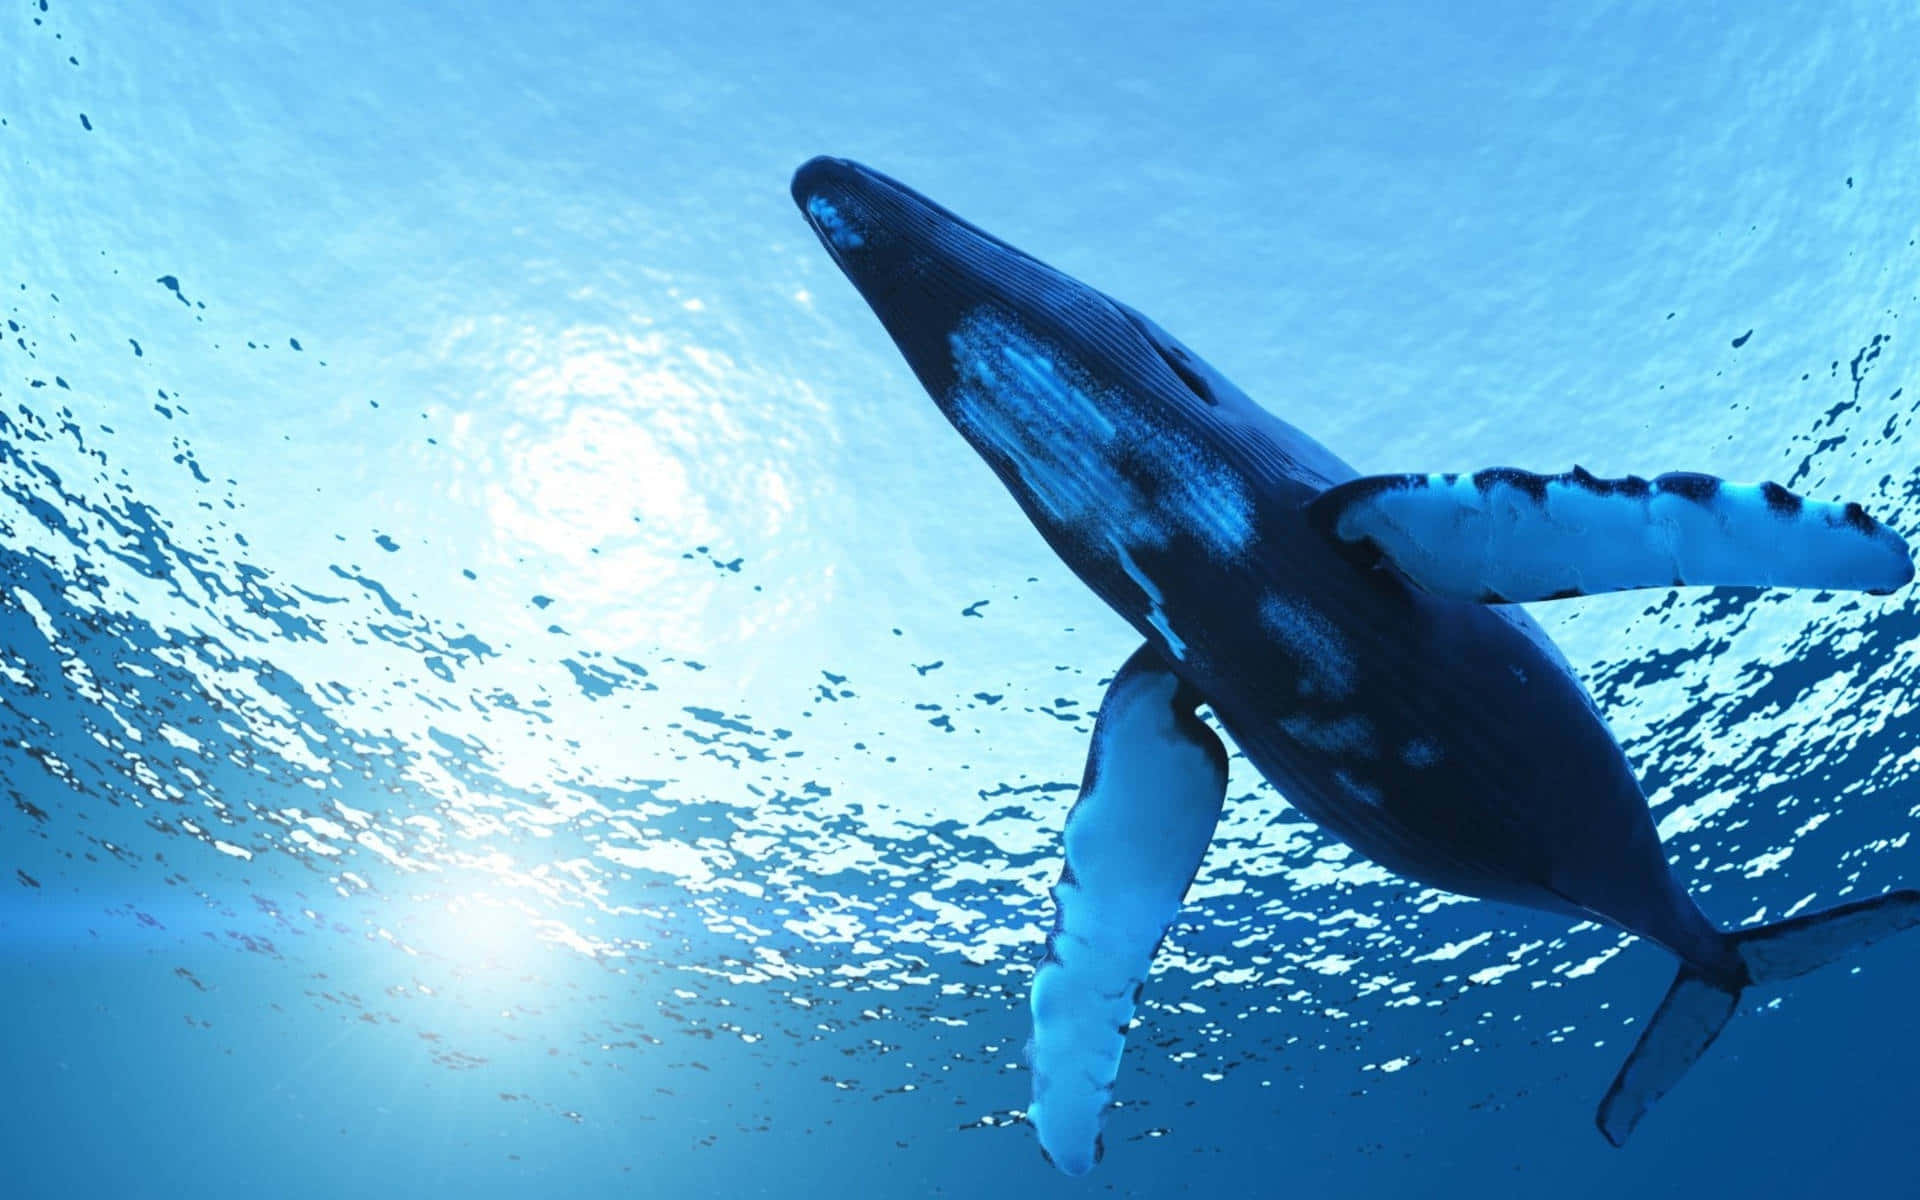 Majestic Humpback Whale Underwater Wallpaper